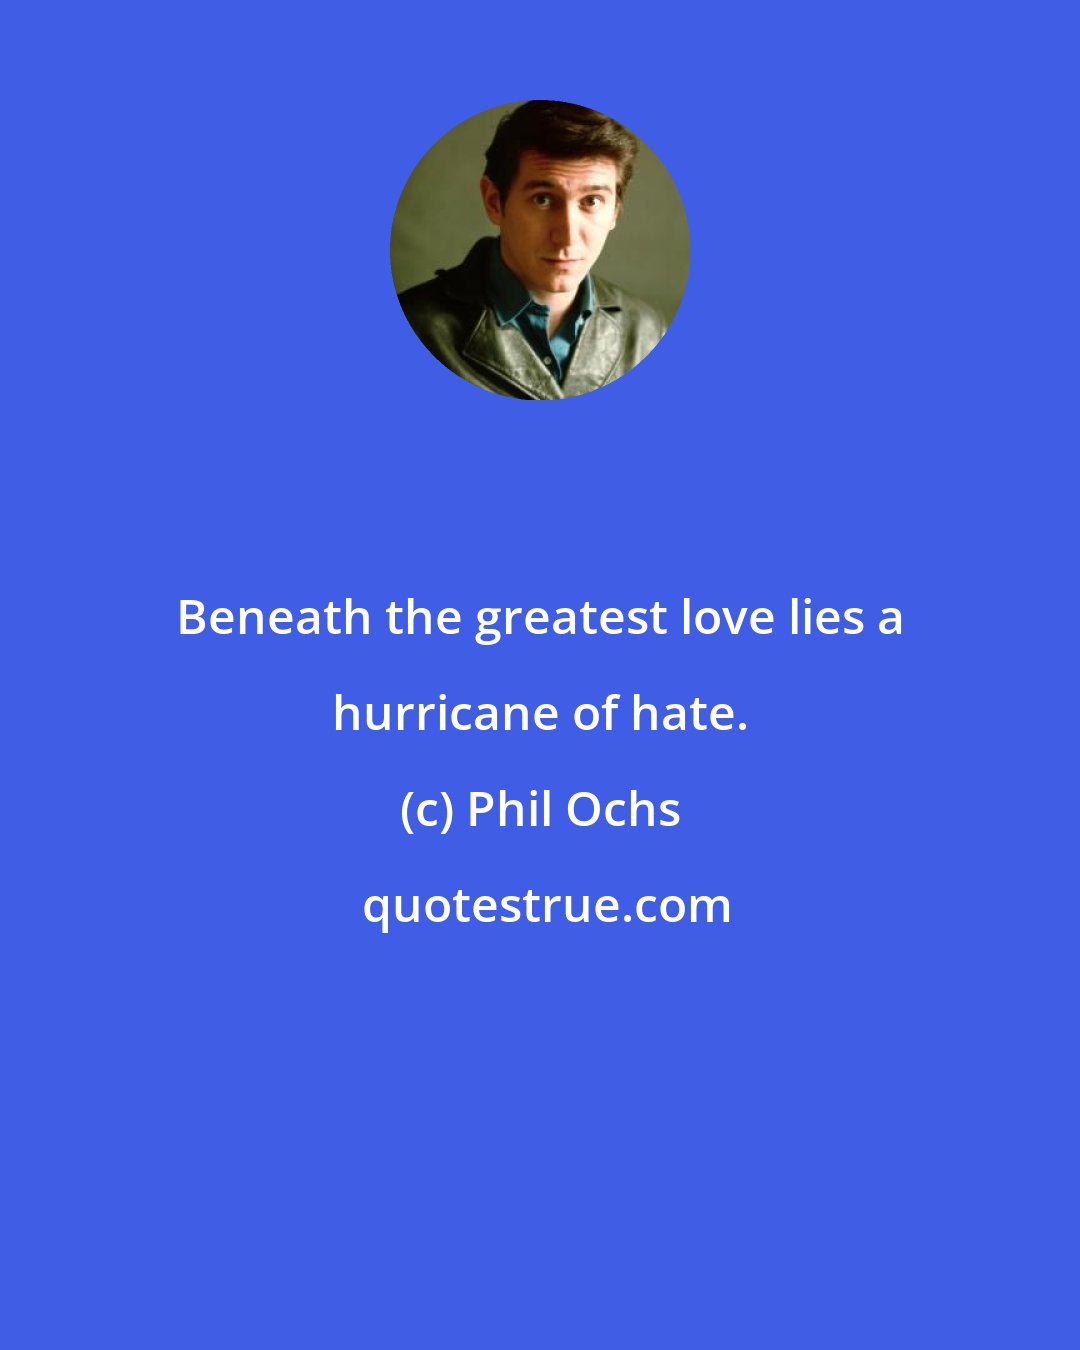 Phil Ochs: Beneath the greatest love lies a hurricane of hate.